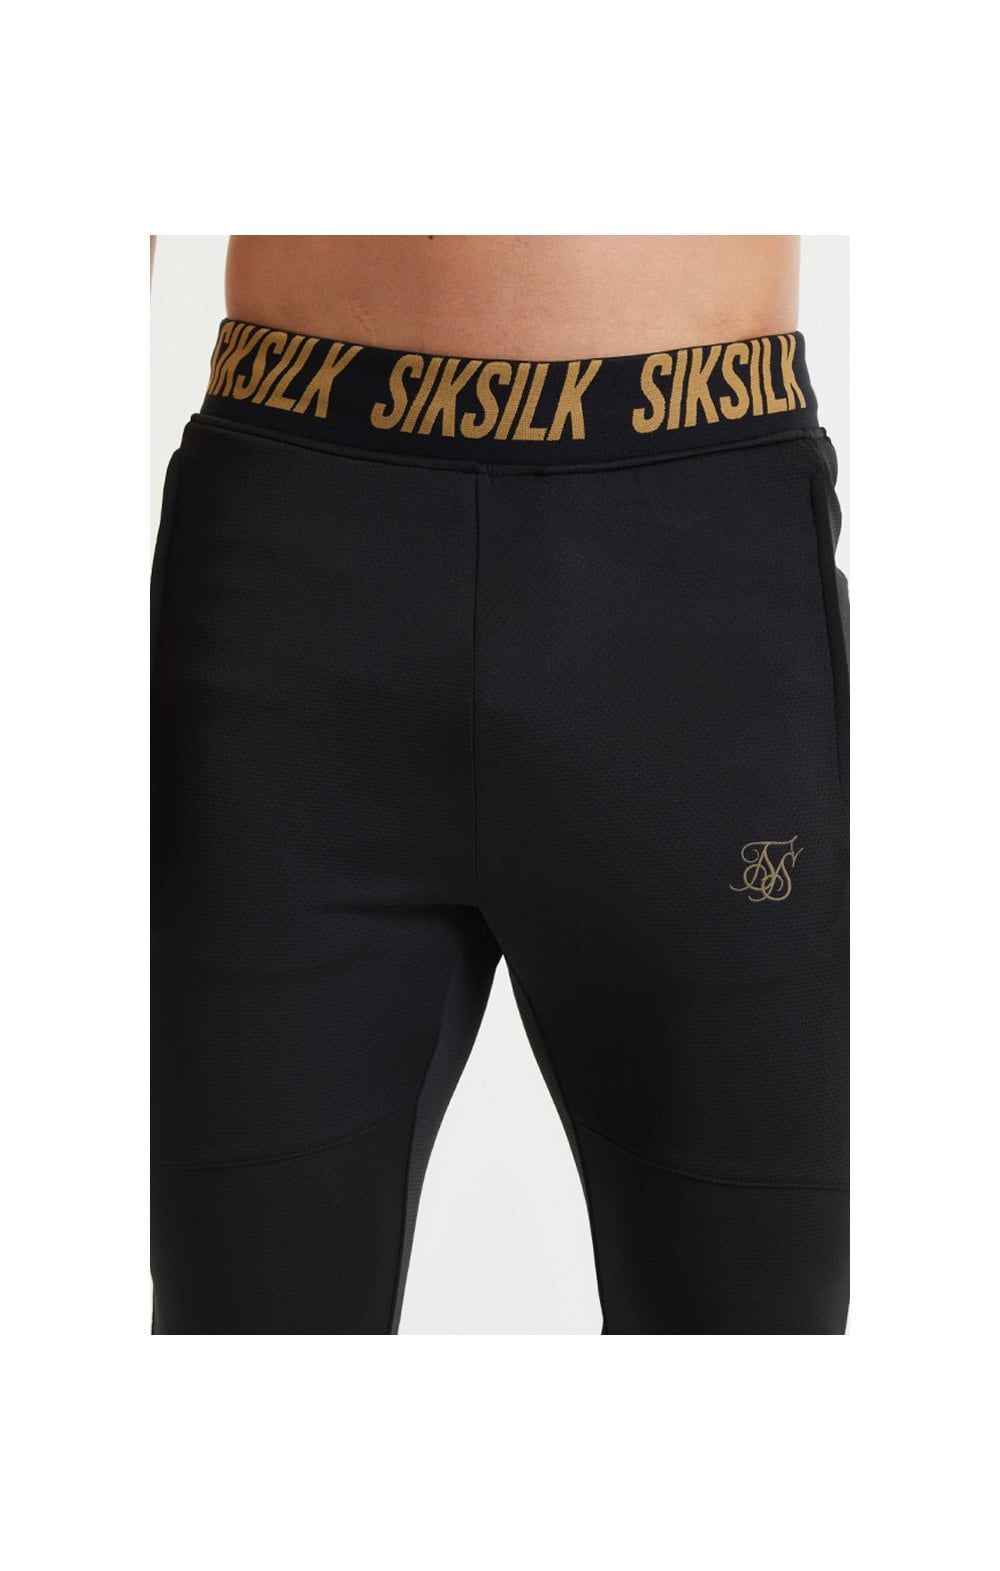 SikSilk Performance Agility Pants - Black & Gold (1)